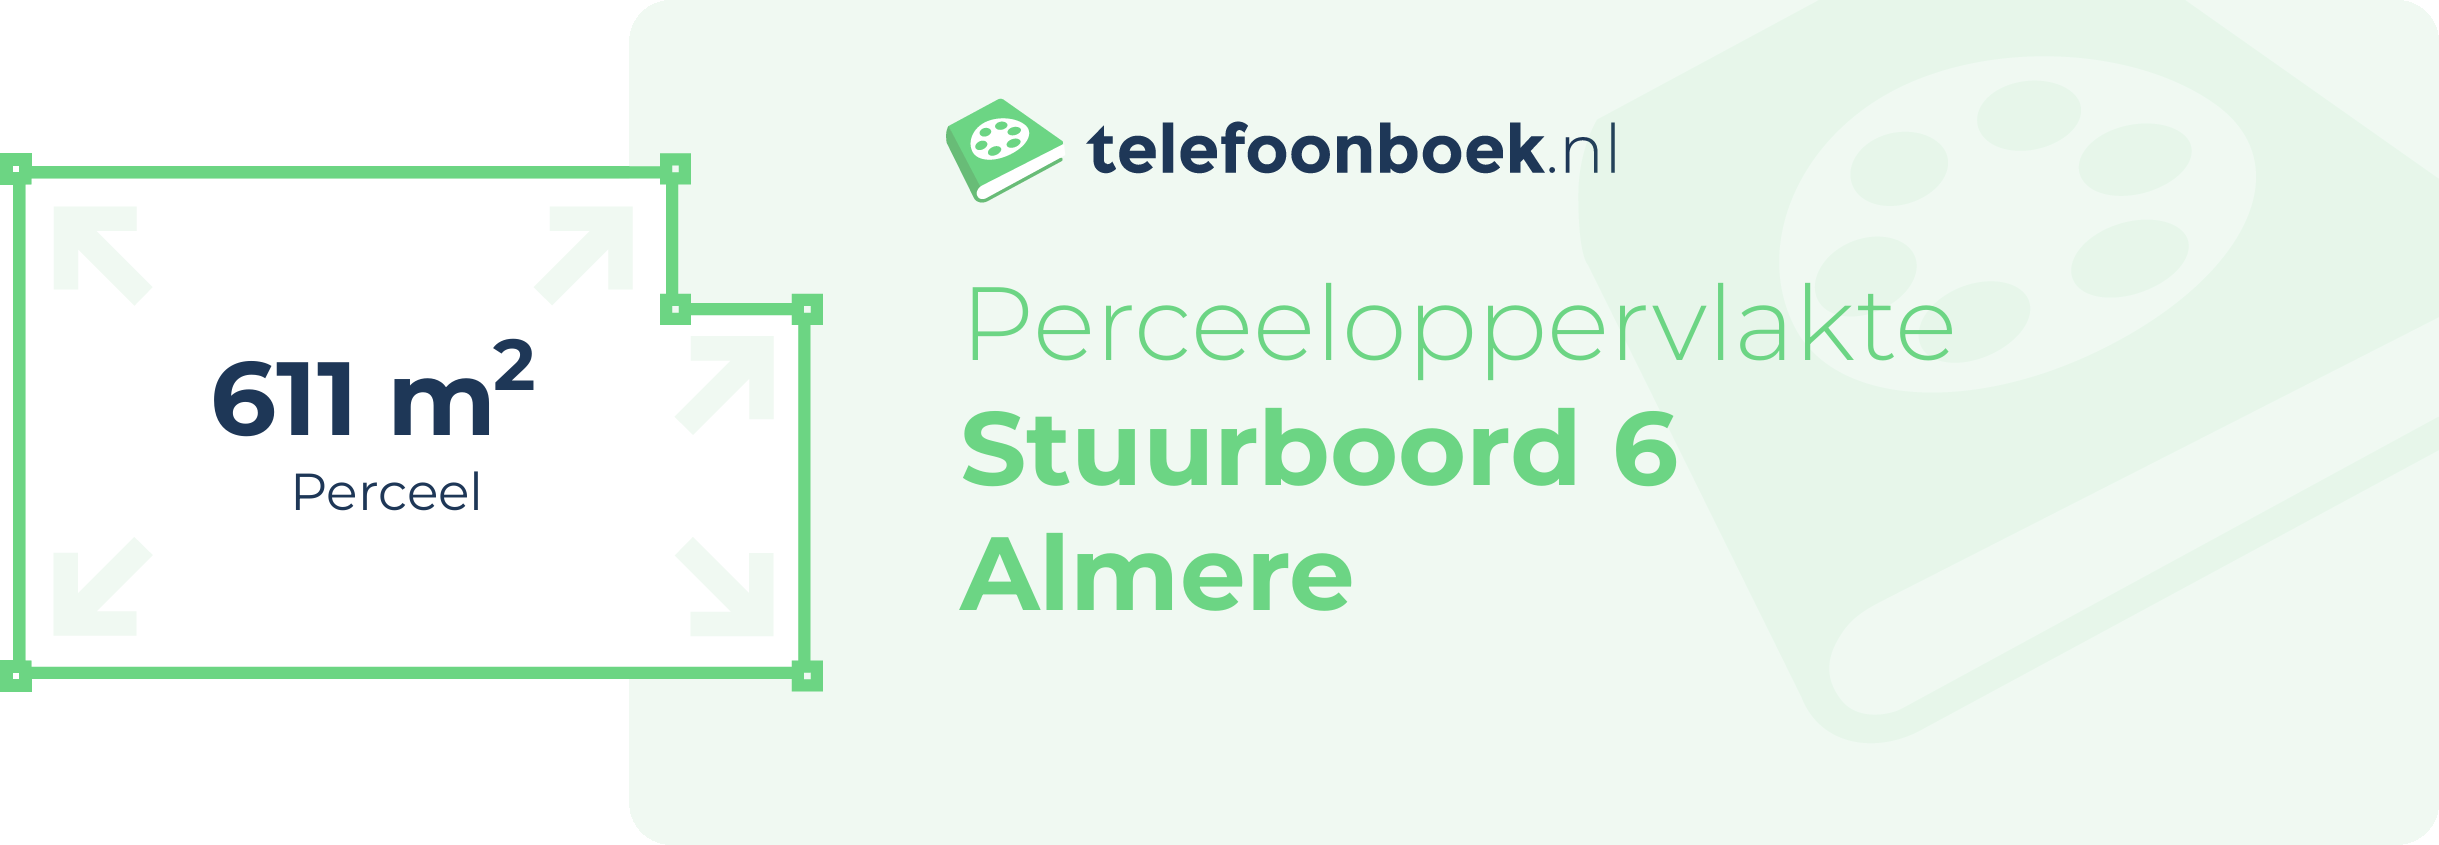 Perceeloppervlakte Stuurboord 6 Almere